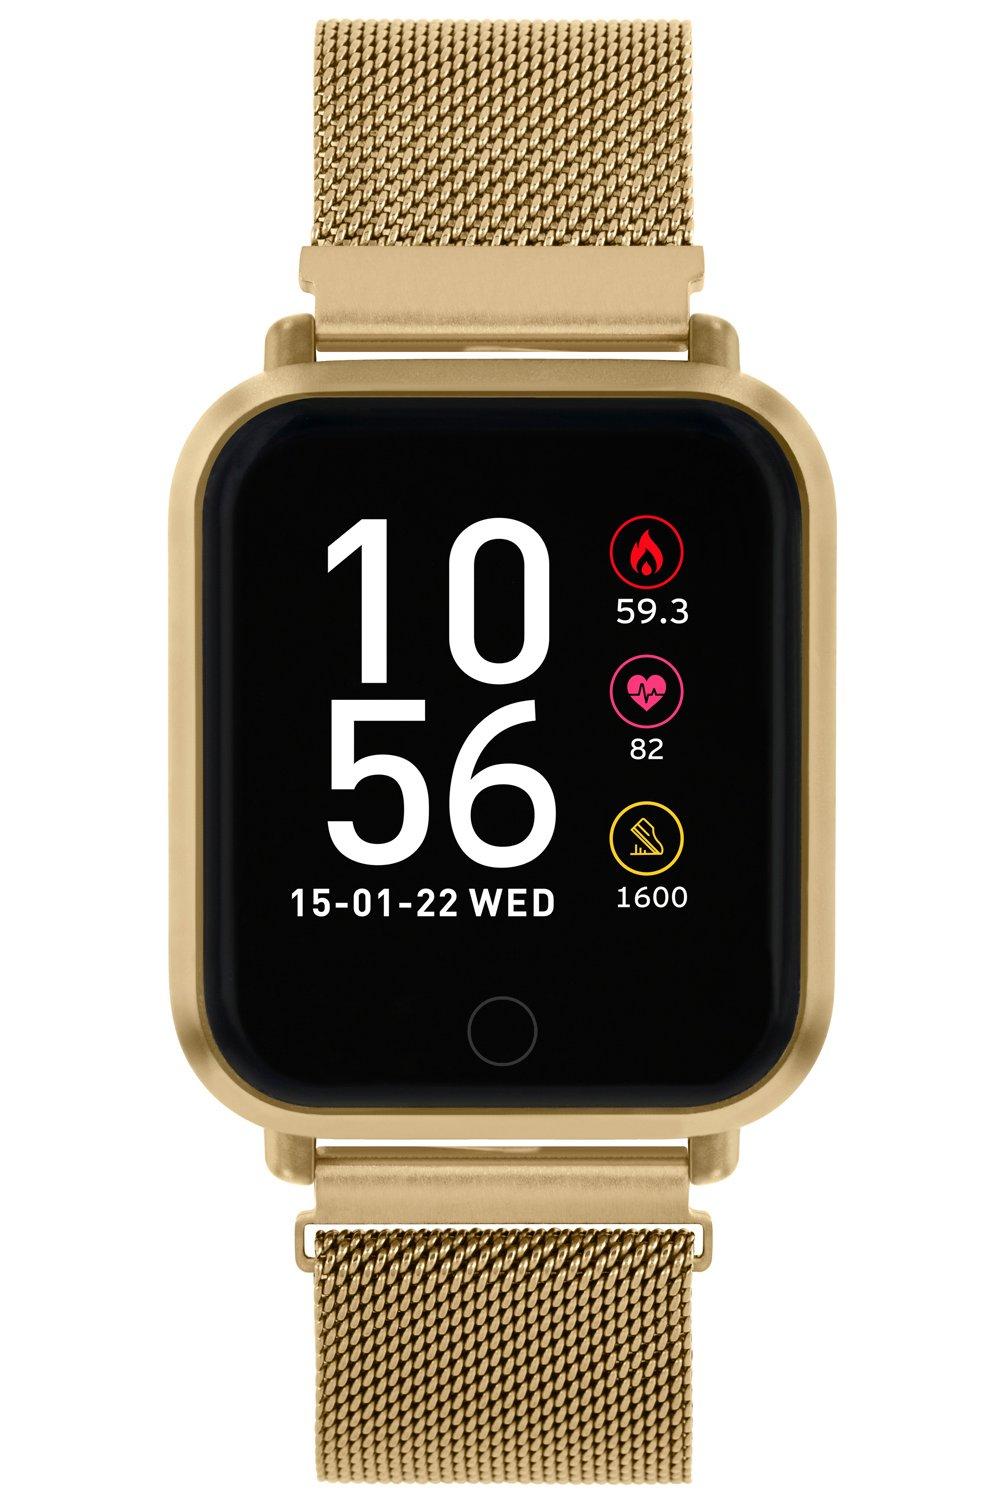 reflex active series 6 smart watch with metal strap - gold